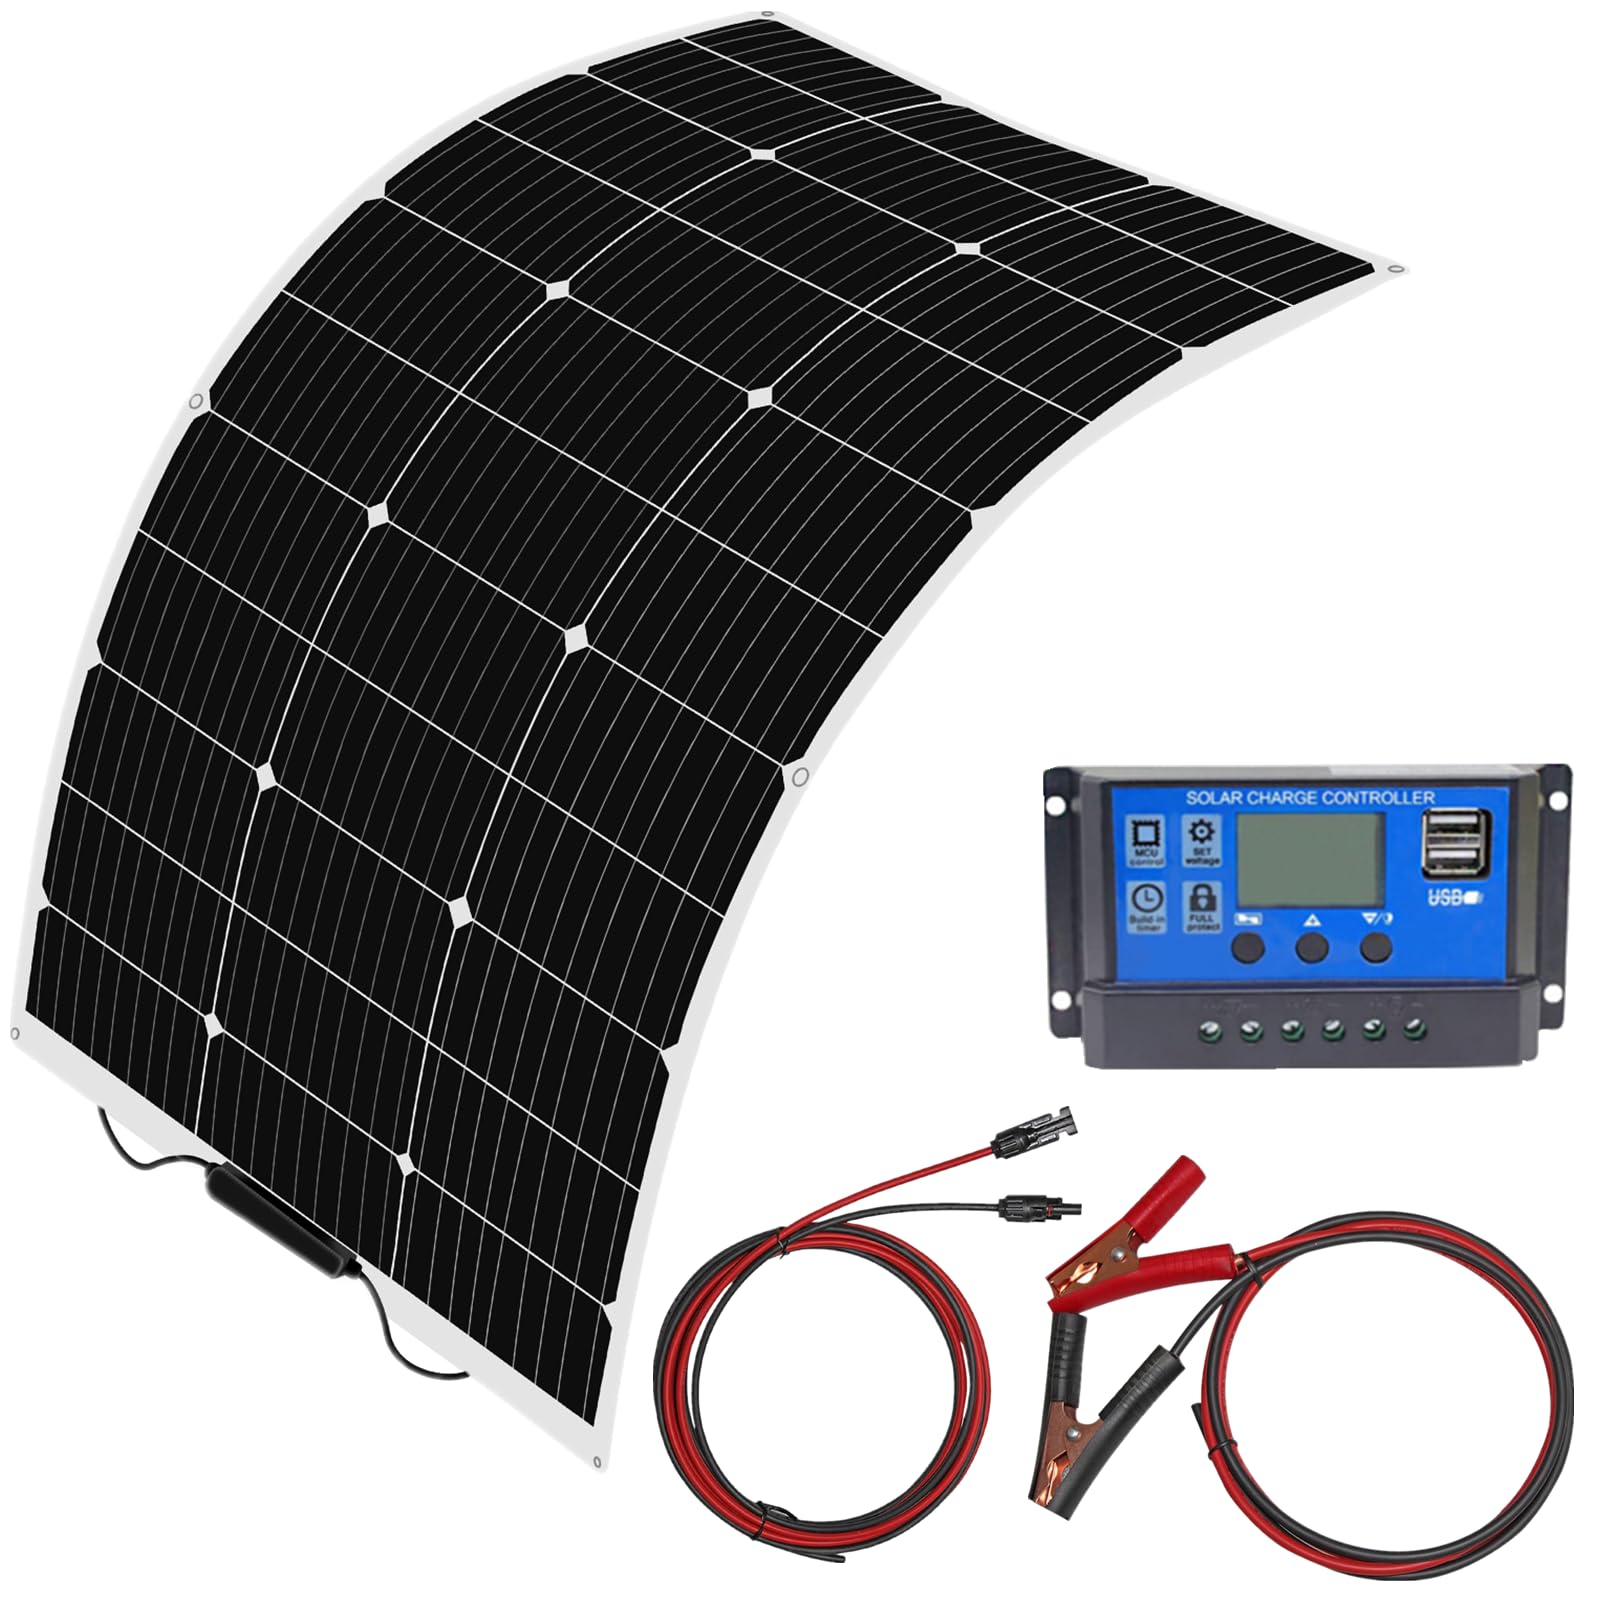 Flexible Solarpanel Kit 100W 12V Monocrystalline Solarmodul 10A Solar Laderegler für Auto, RV, Boot, Wohnwagen, Hause Dach 12v Solar Ladegerät(100W solarpanel kit)